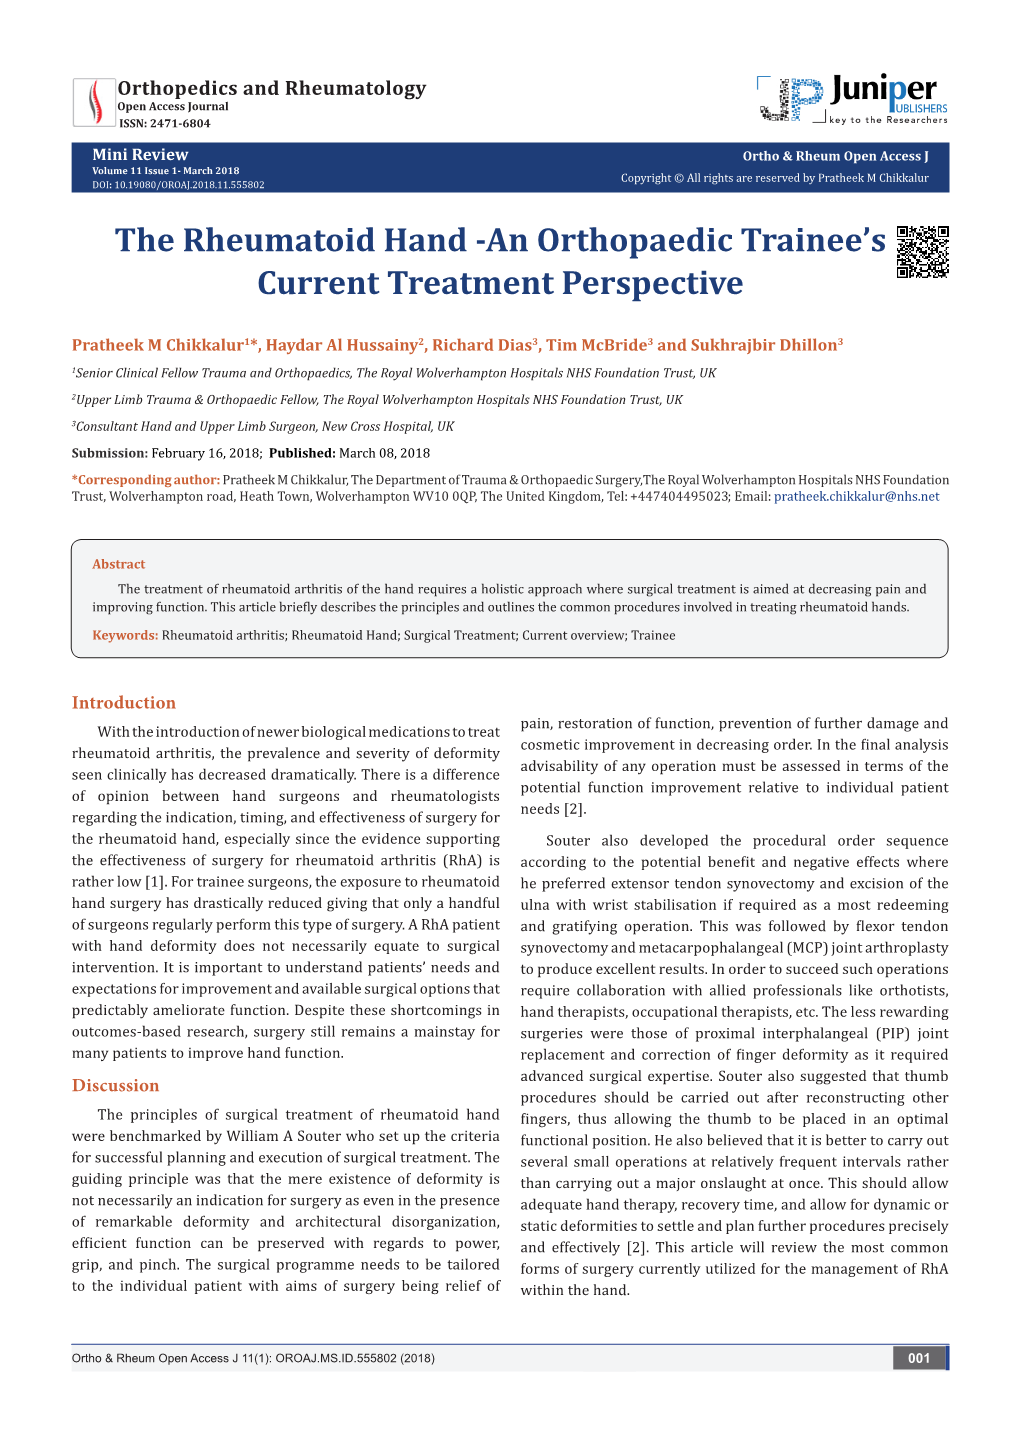 The Rheumatoid Hand -An Orthopaedic Trainee’S Current Treatment Perspective